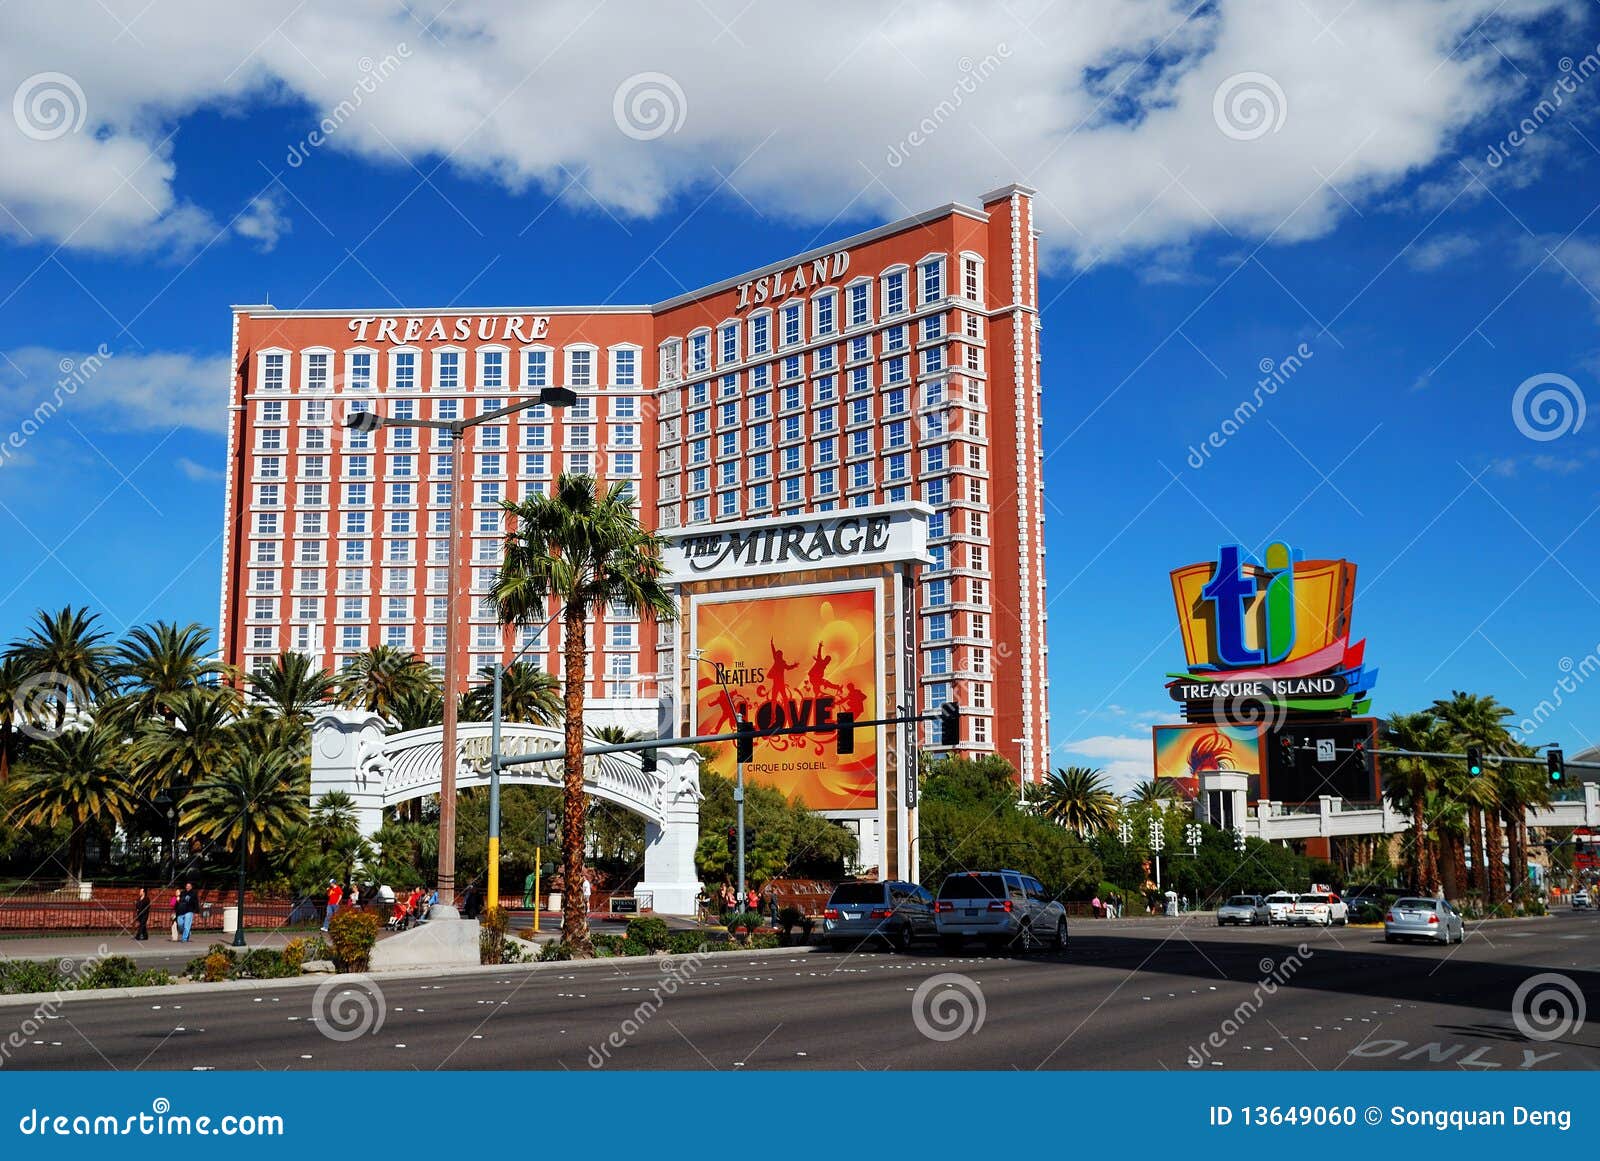 Cosmopolitan Hotel Las Vegas Casino